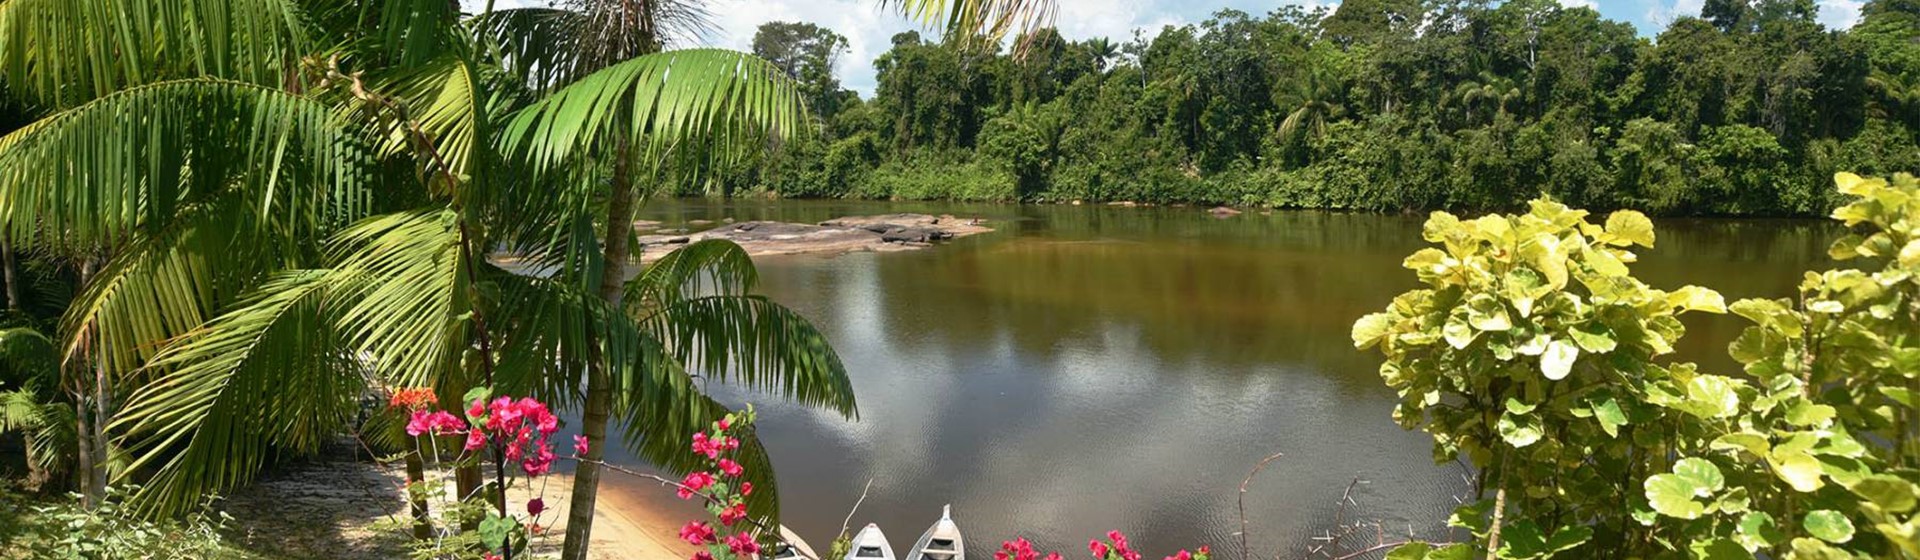 Access Suriname Travel